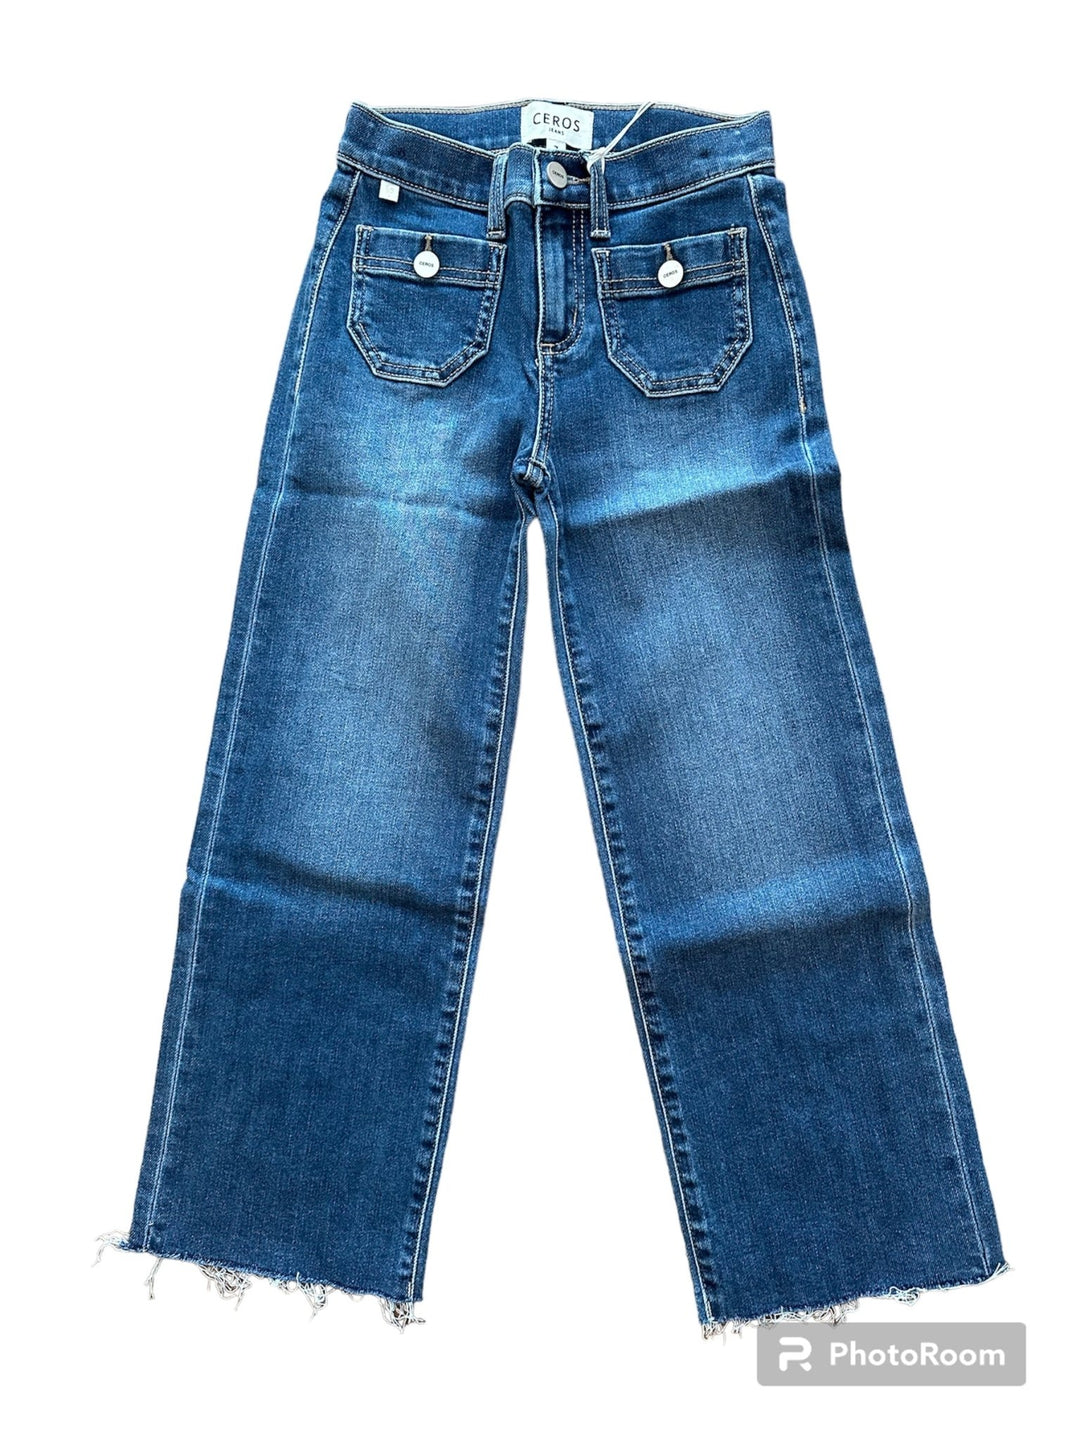 Ceros Wide Leg Jeans - jernijacks